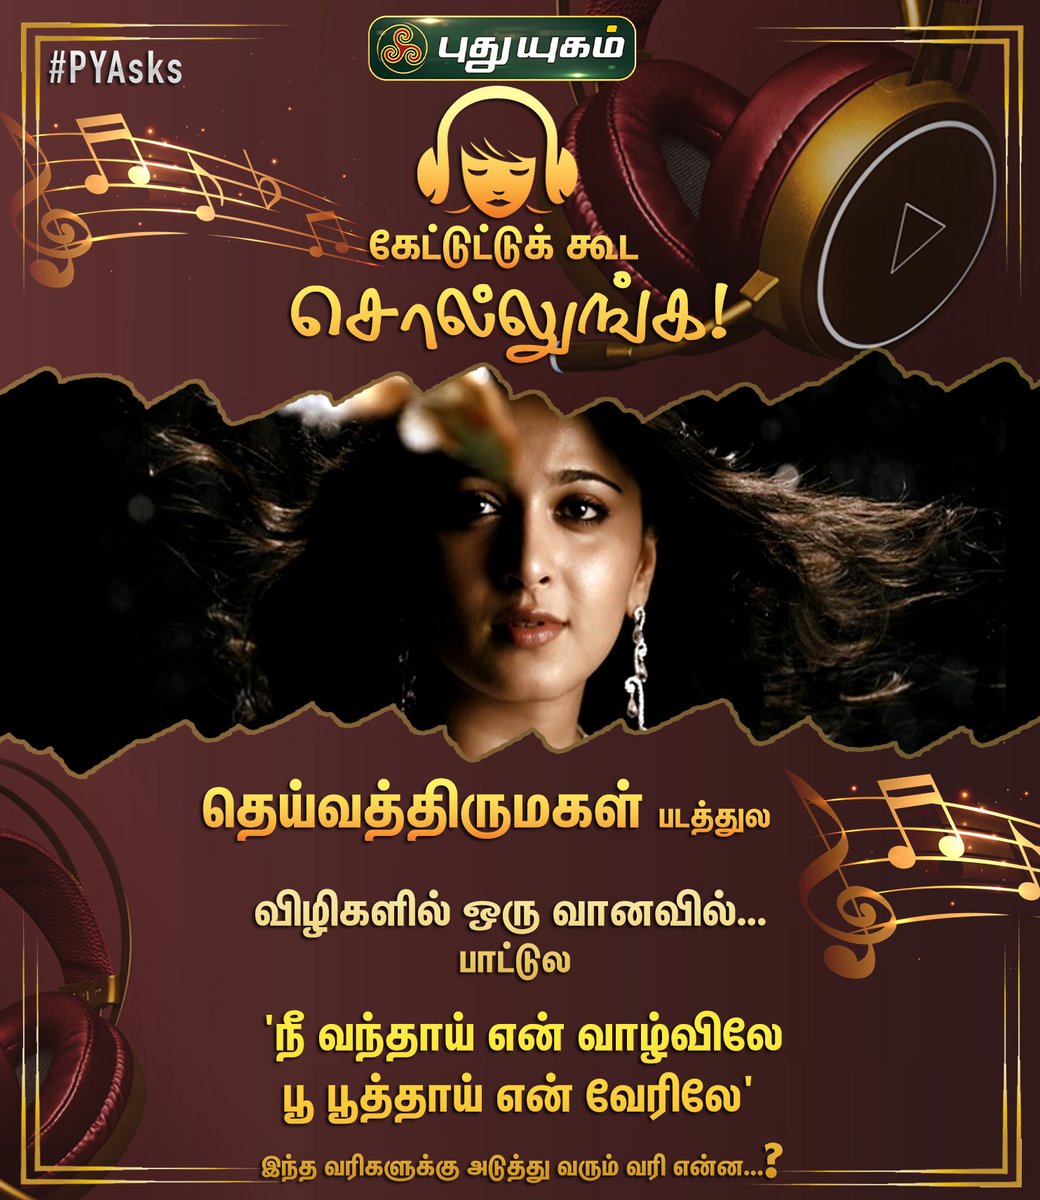 #PYAsks #Deivathirumagal #ChiyaanVikram #VizhigalilOruVaanavil  #AnushkaShetty #GVPrakashKumar #GVP #namuthukumar #lyricistnamuthukumar #AmalaPaul #TamilMelodies #GuesstheLyrics #Songs #PuthuyugamTV